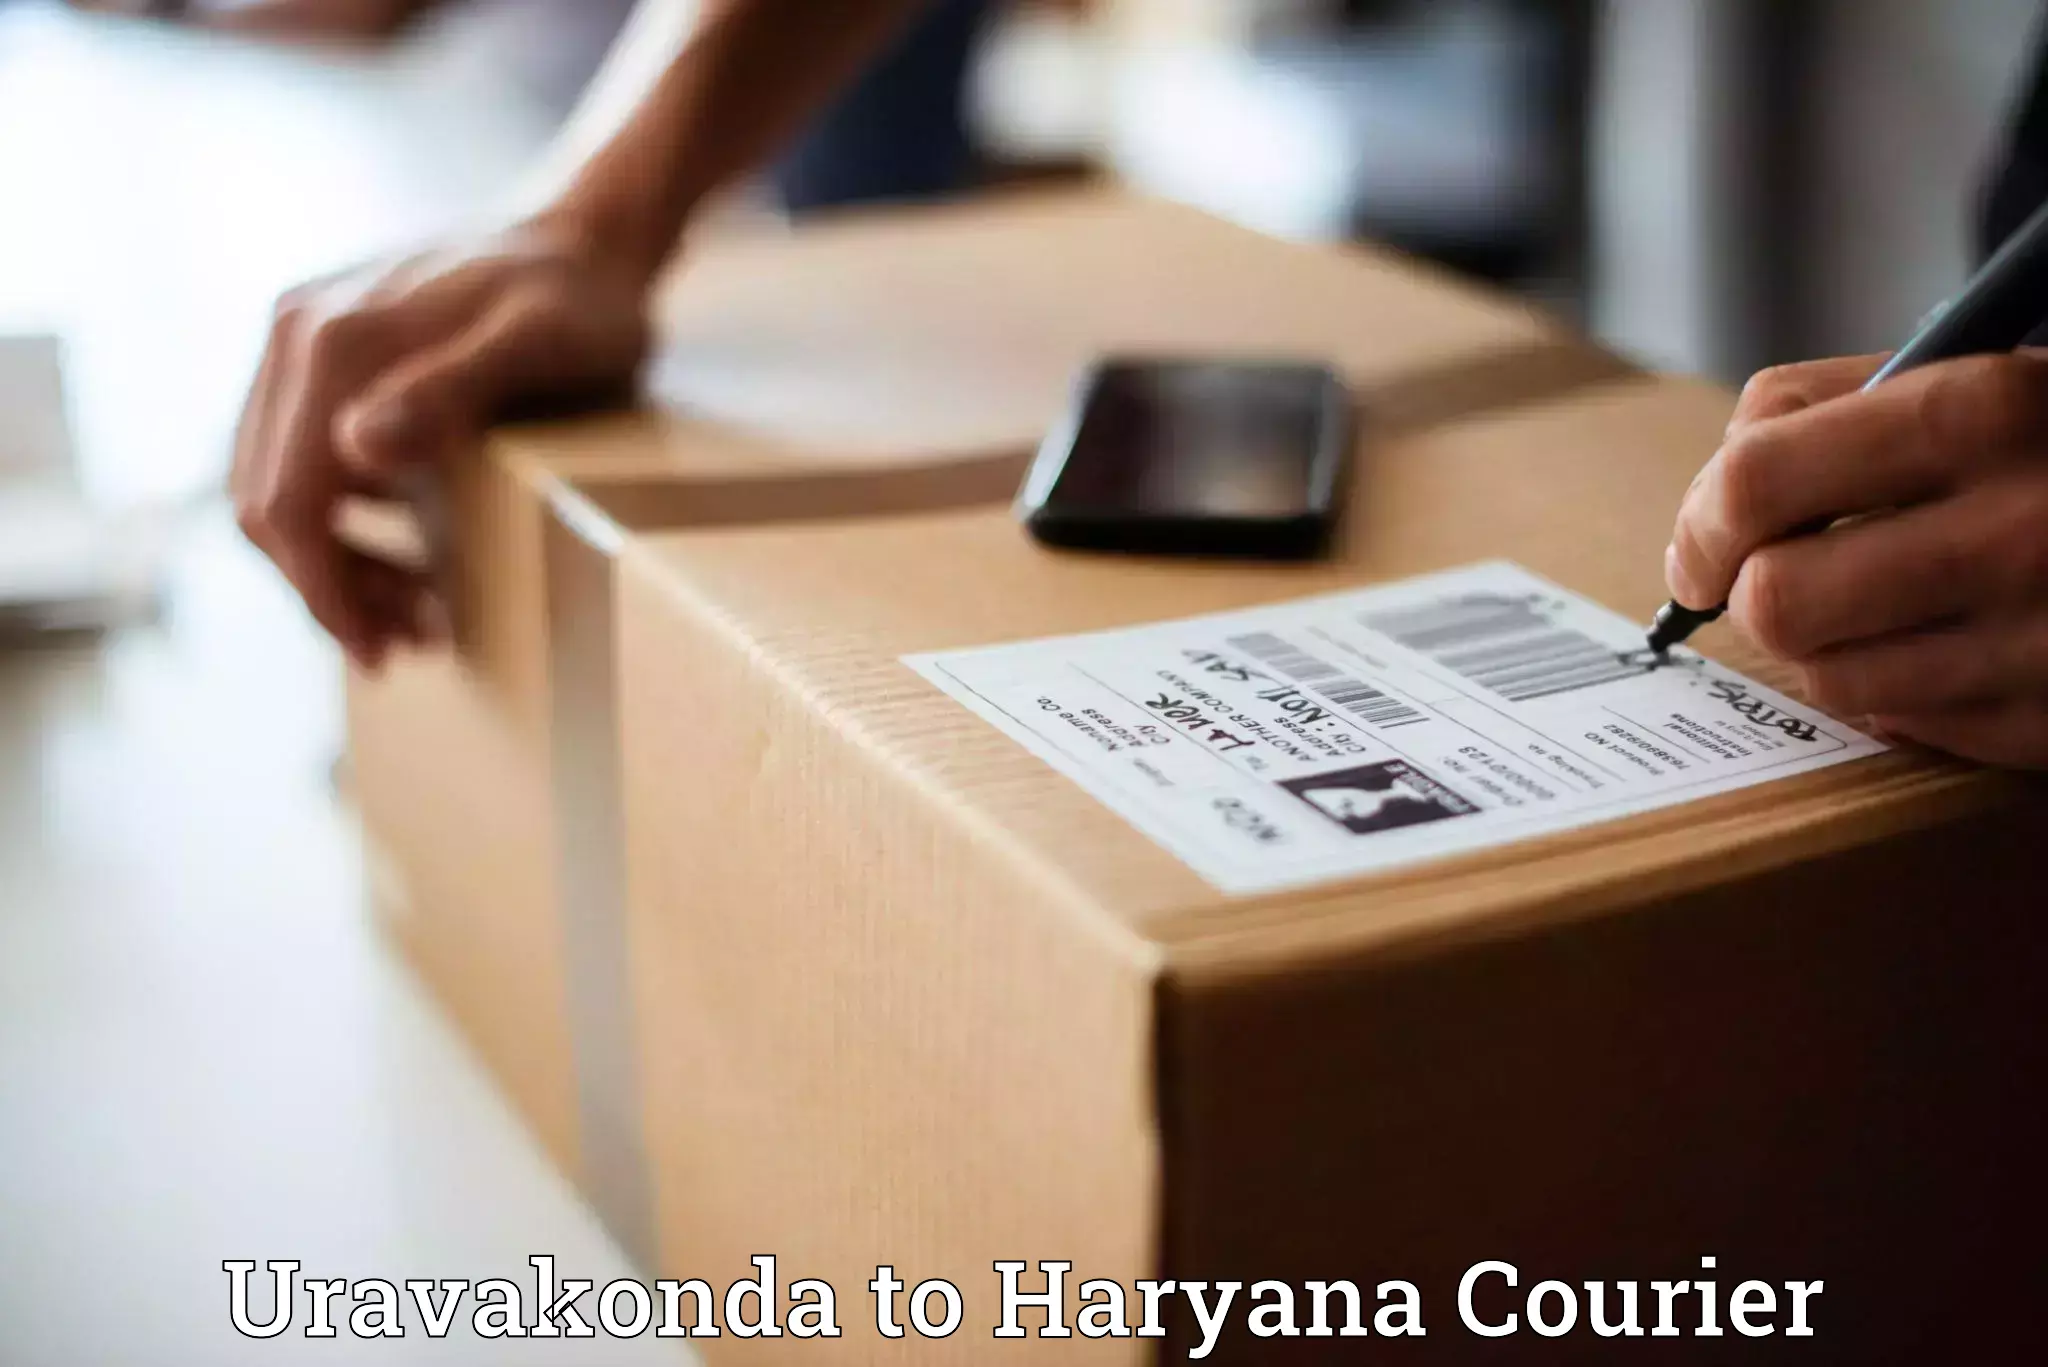 Pharmaceutical courier Uravakonda to NCR Haryana